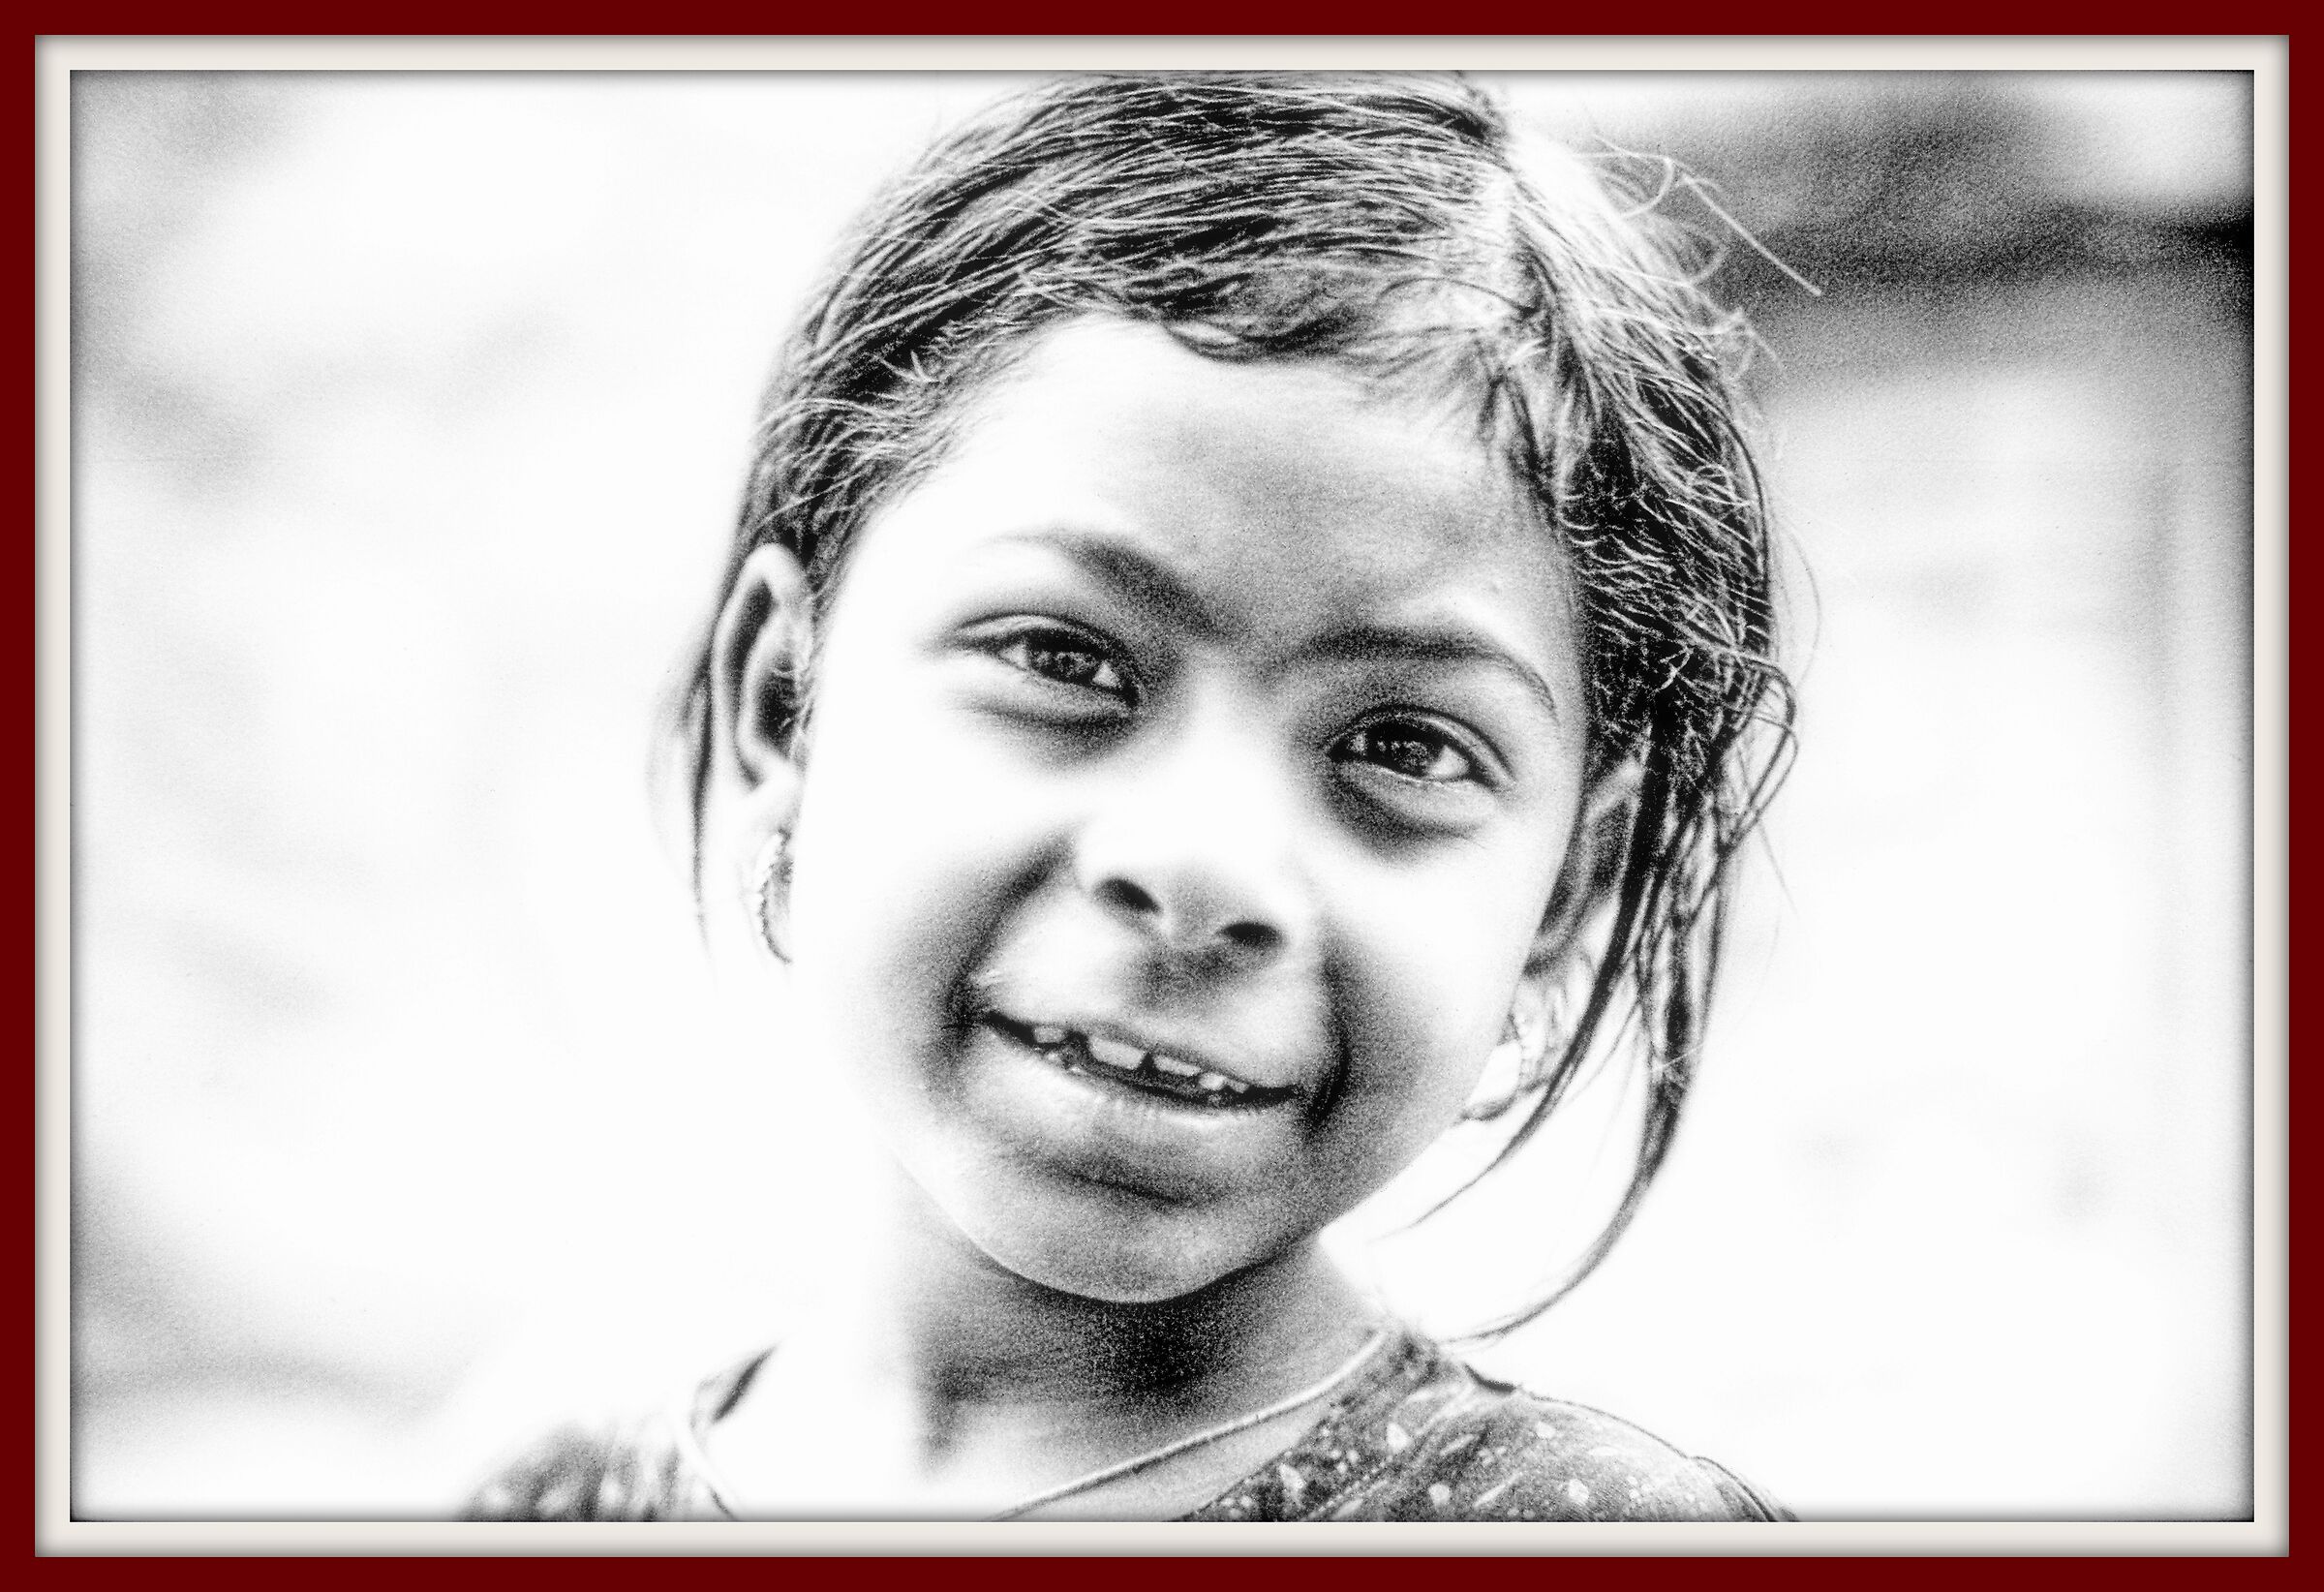 Little girl - Kodari - Nepal...